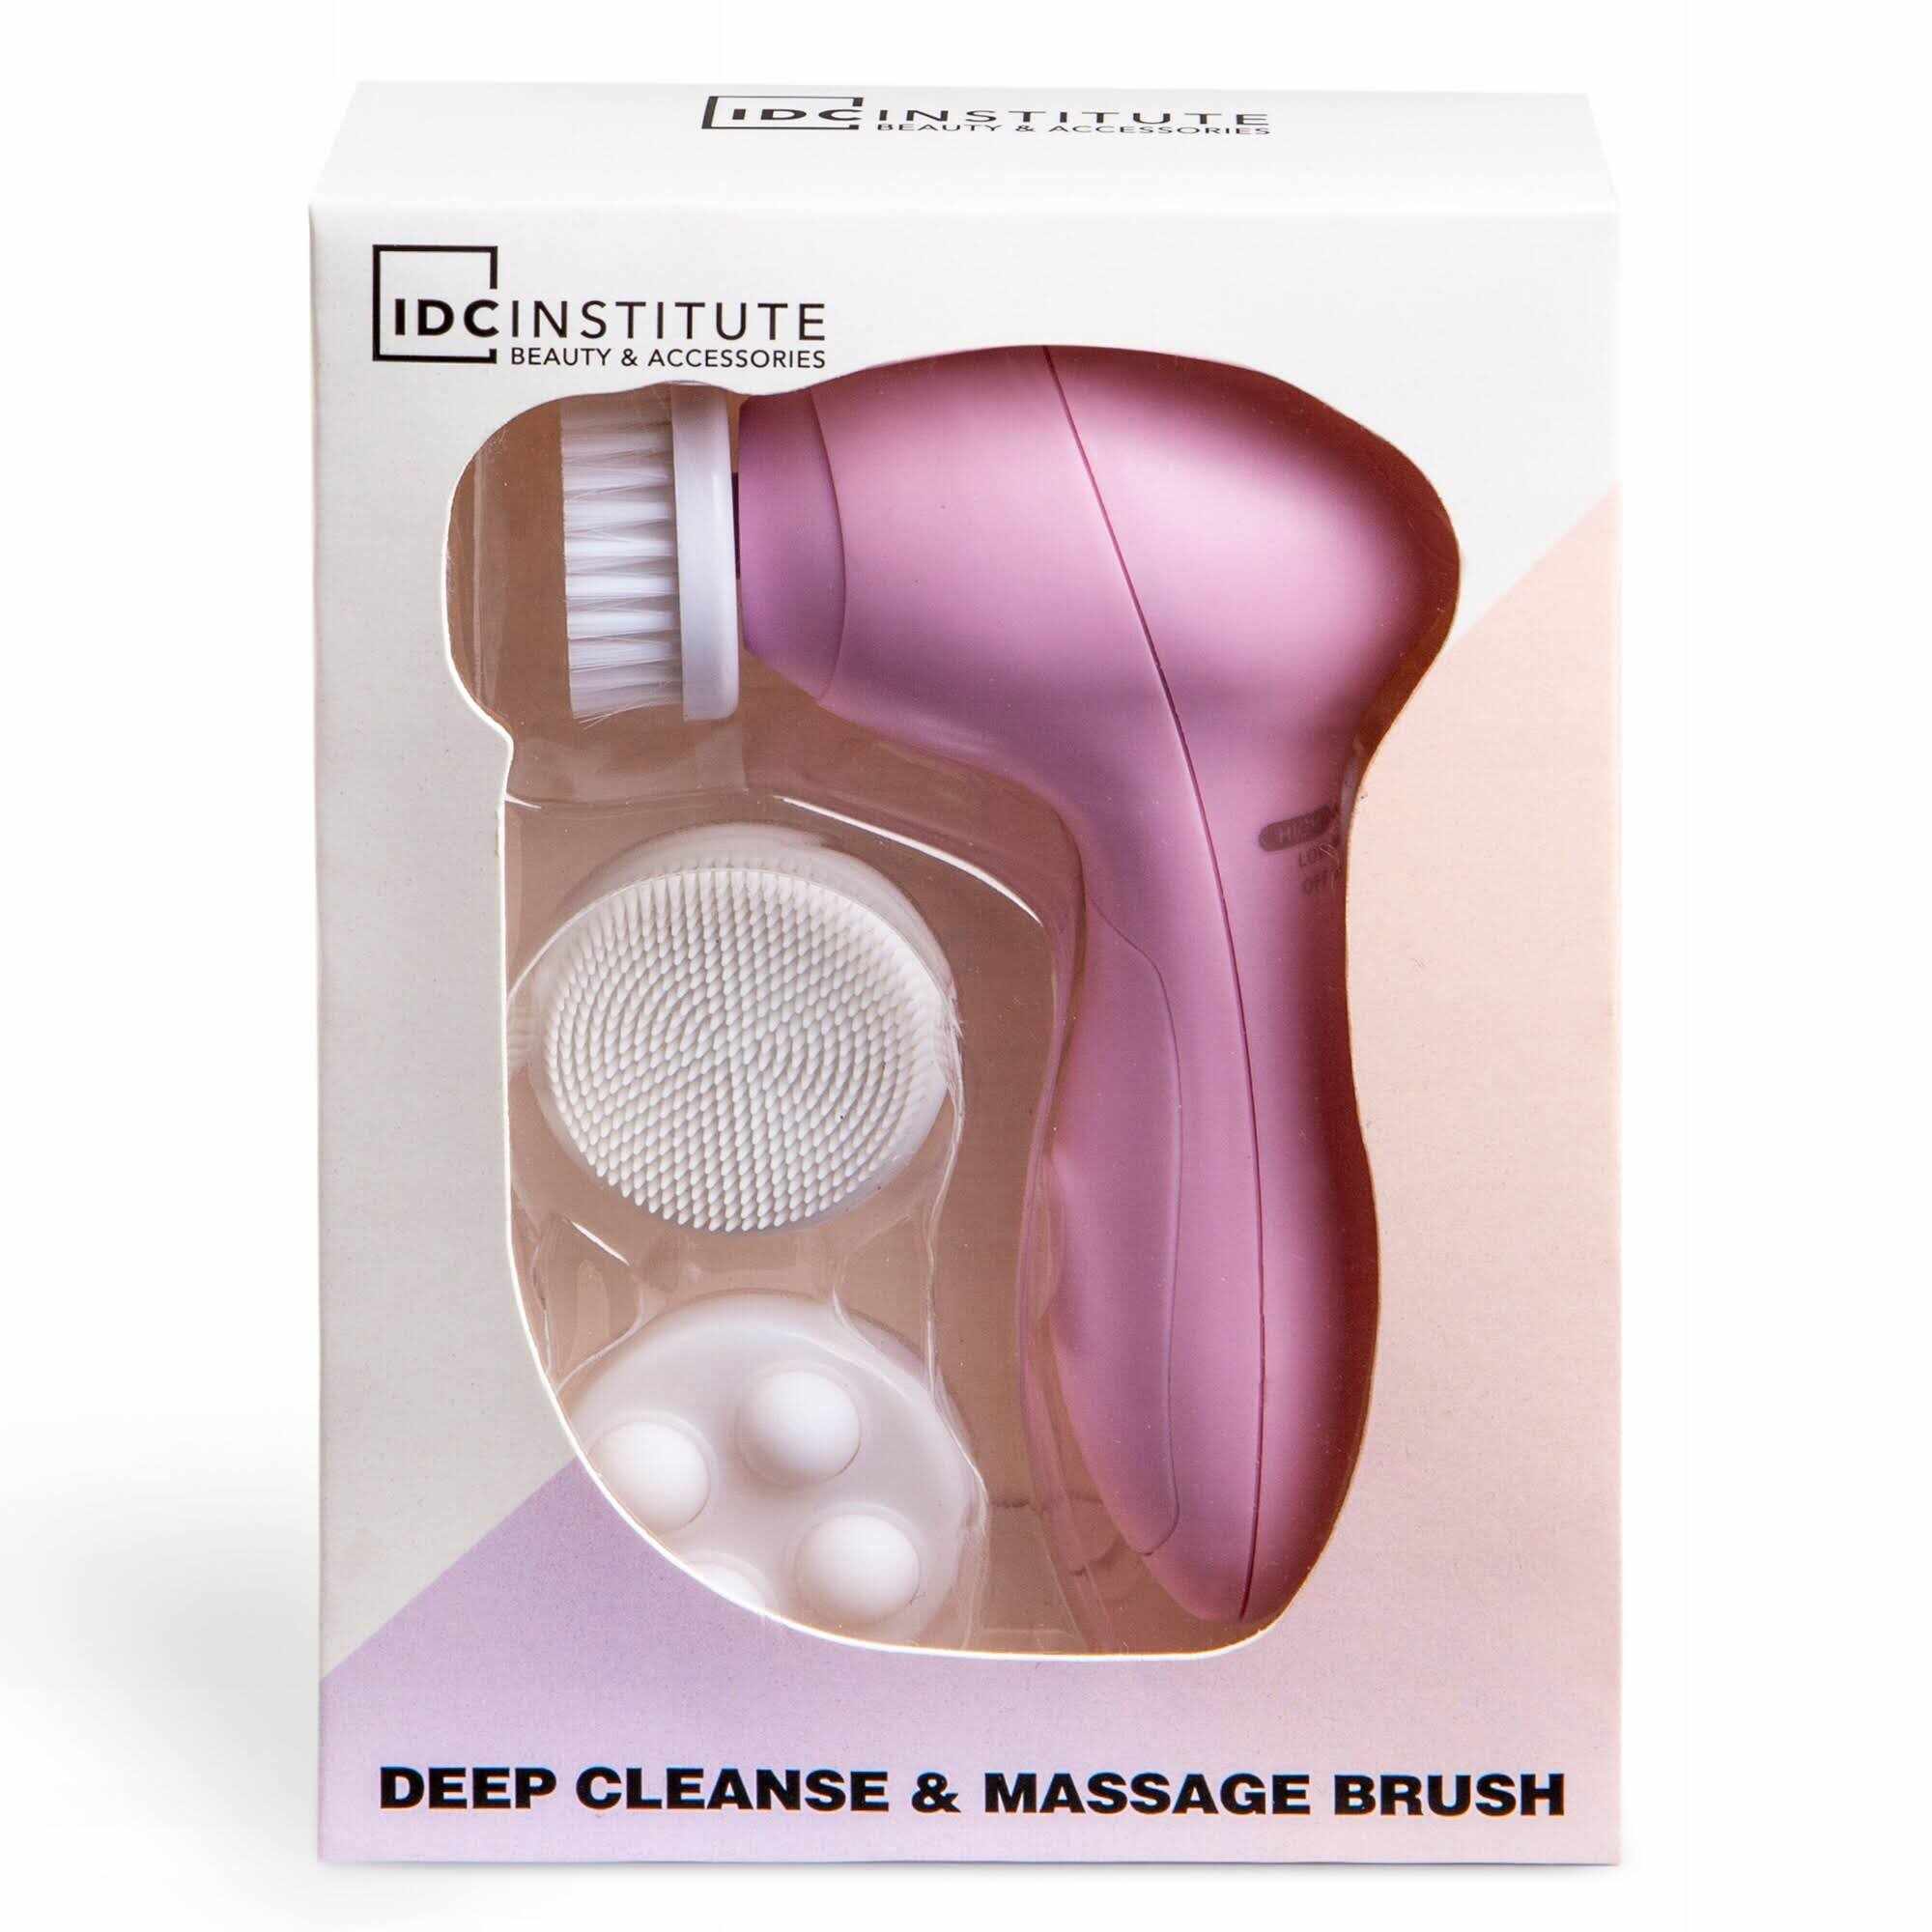 Aparat de masaj facial IDC INSTITUTE DEEP CLEANSE & MASSAGE ELECTRIC BRUSH 1 soft brush, 1 face massager and 1 silicone brush